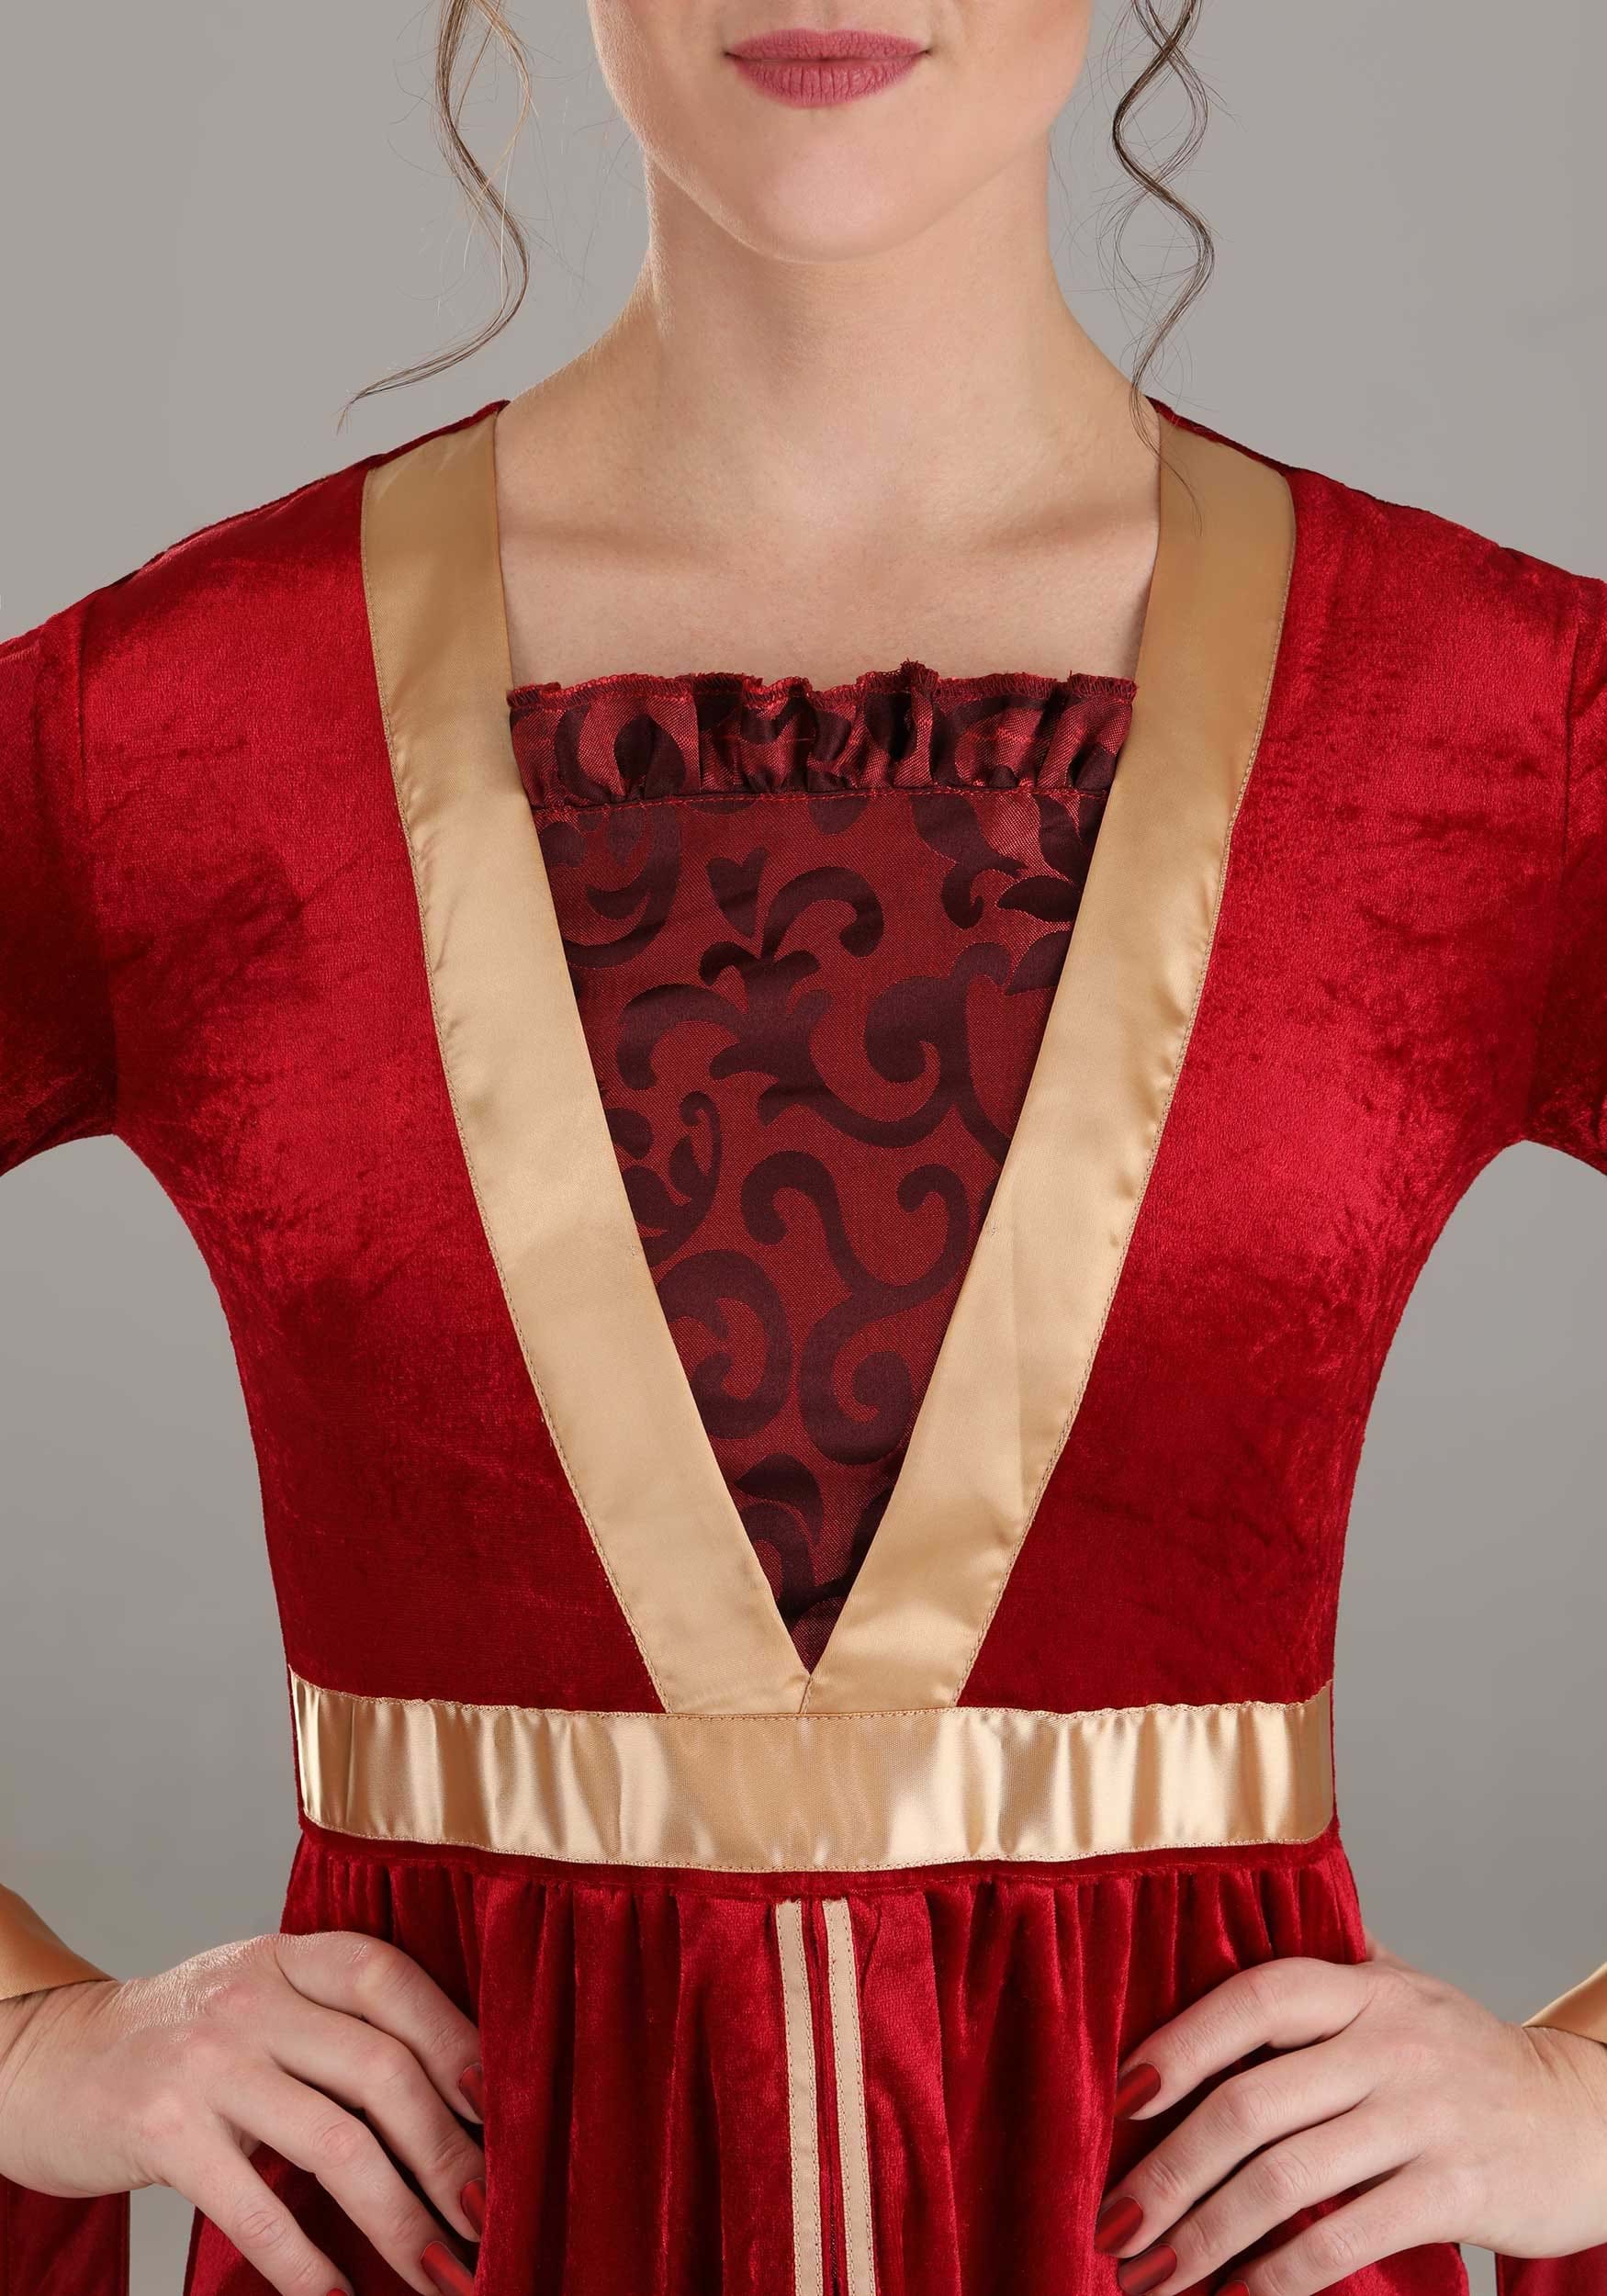 Historical Renaissance Dress for Women, Renaissance Period Costume